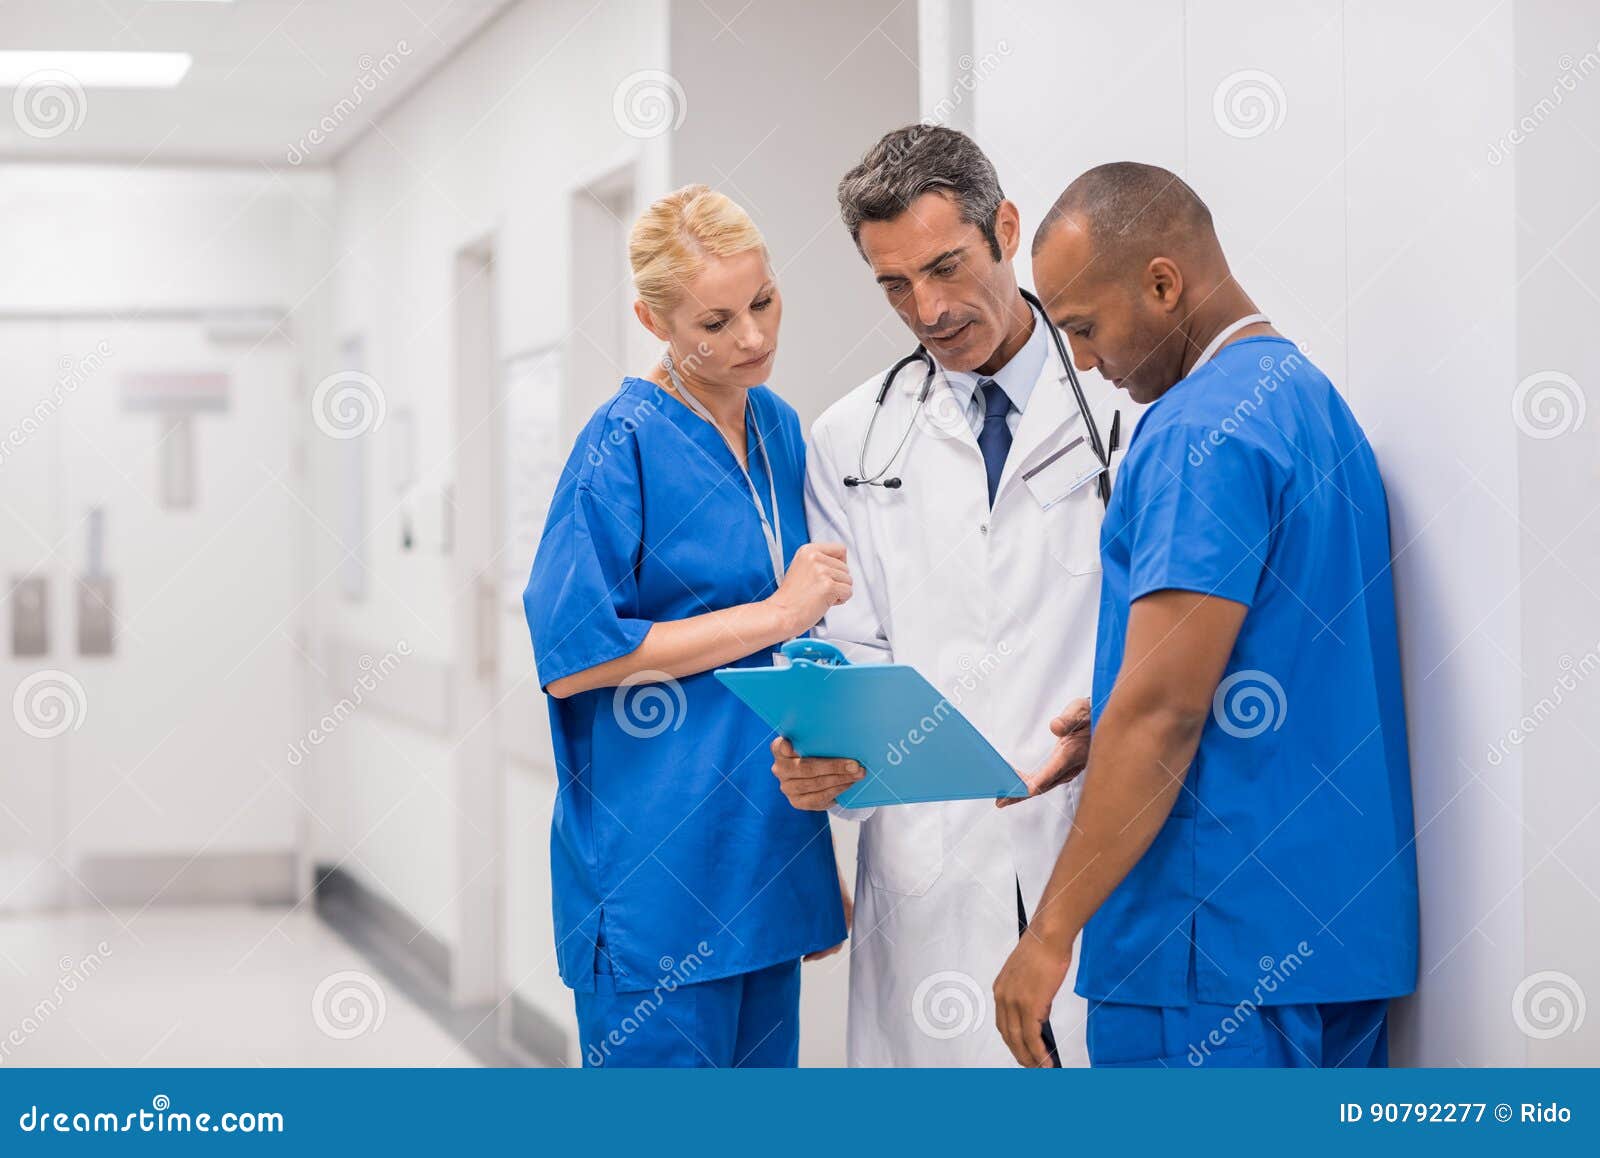 medical staff meeting